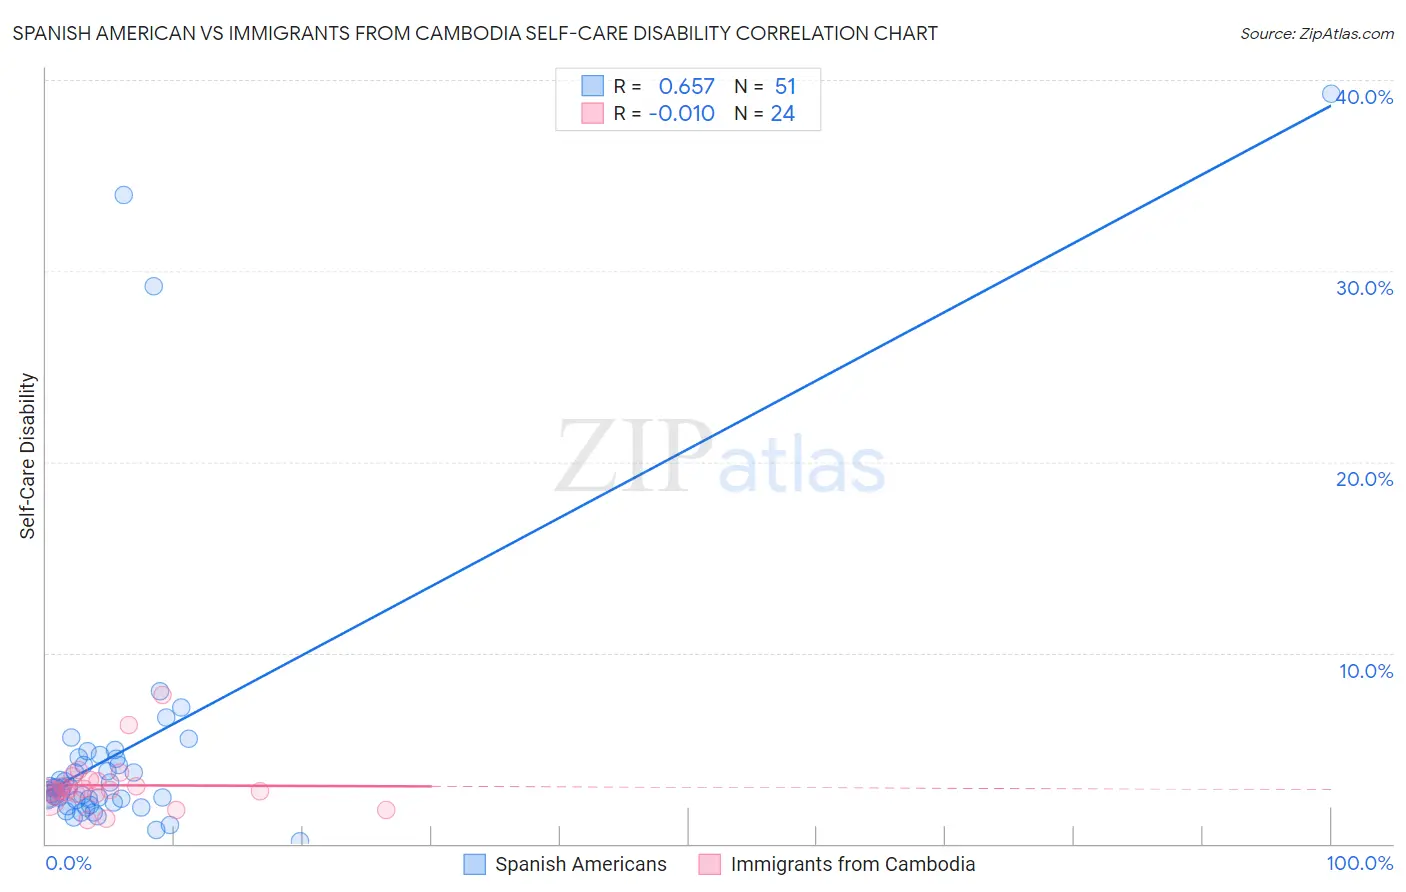 Spanish American vs Immigrants from Cambodia Self-Care Disability